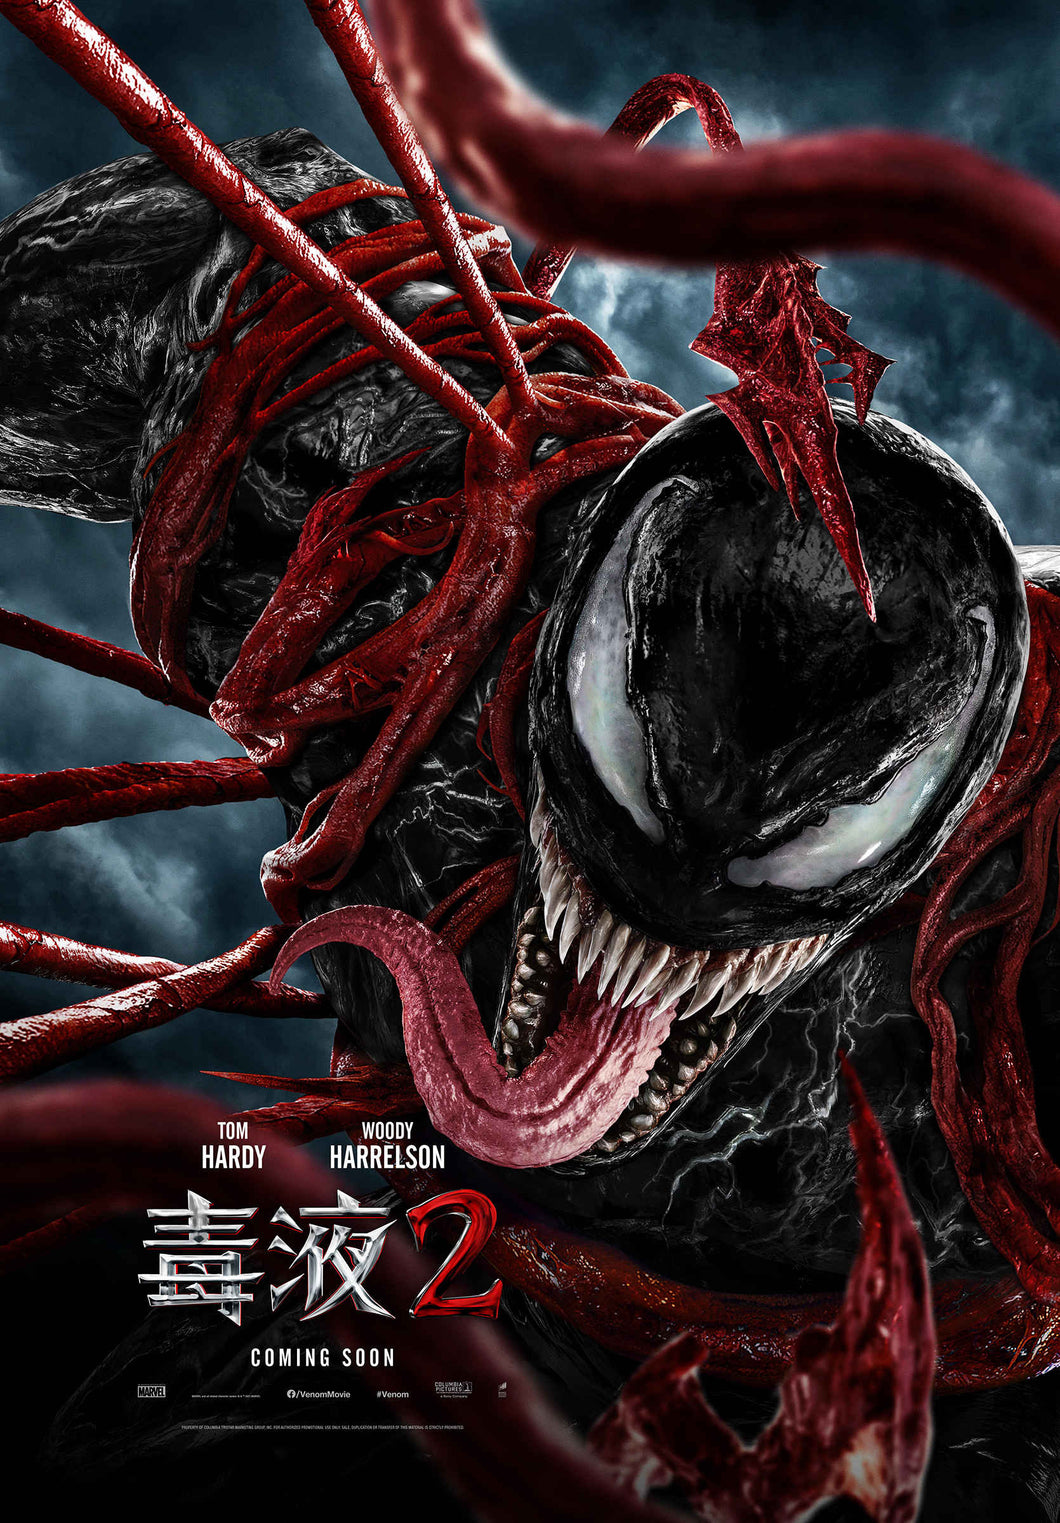 Woody Harrelson As Carnage In Venom Movie Wallpapers